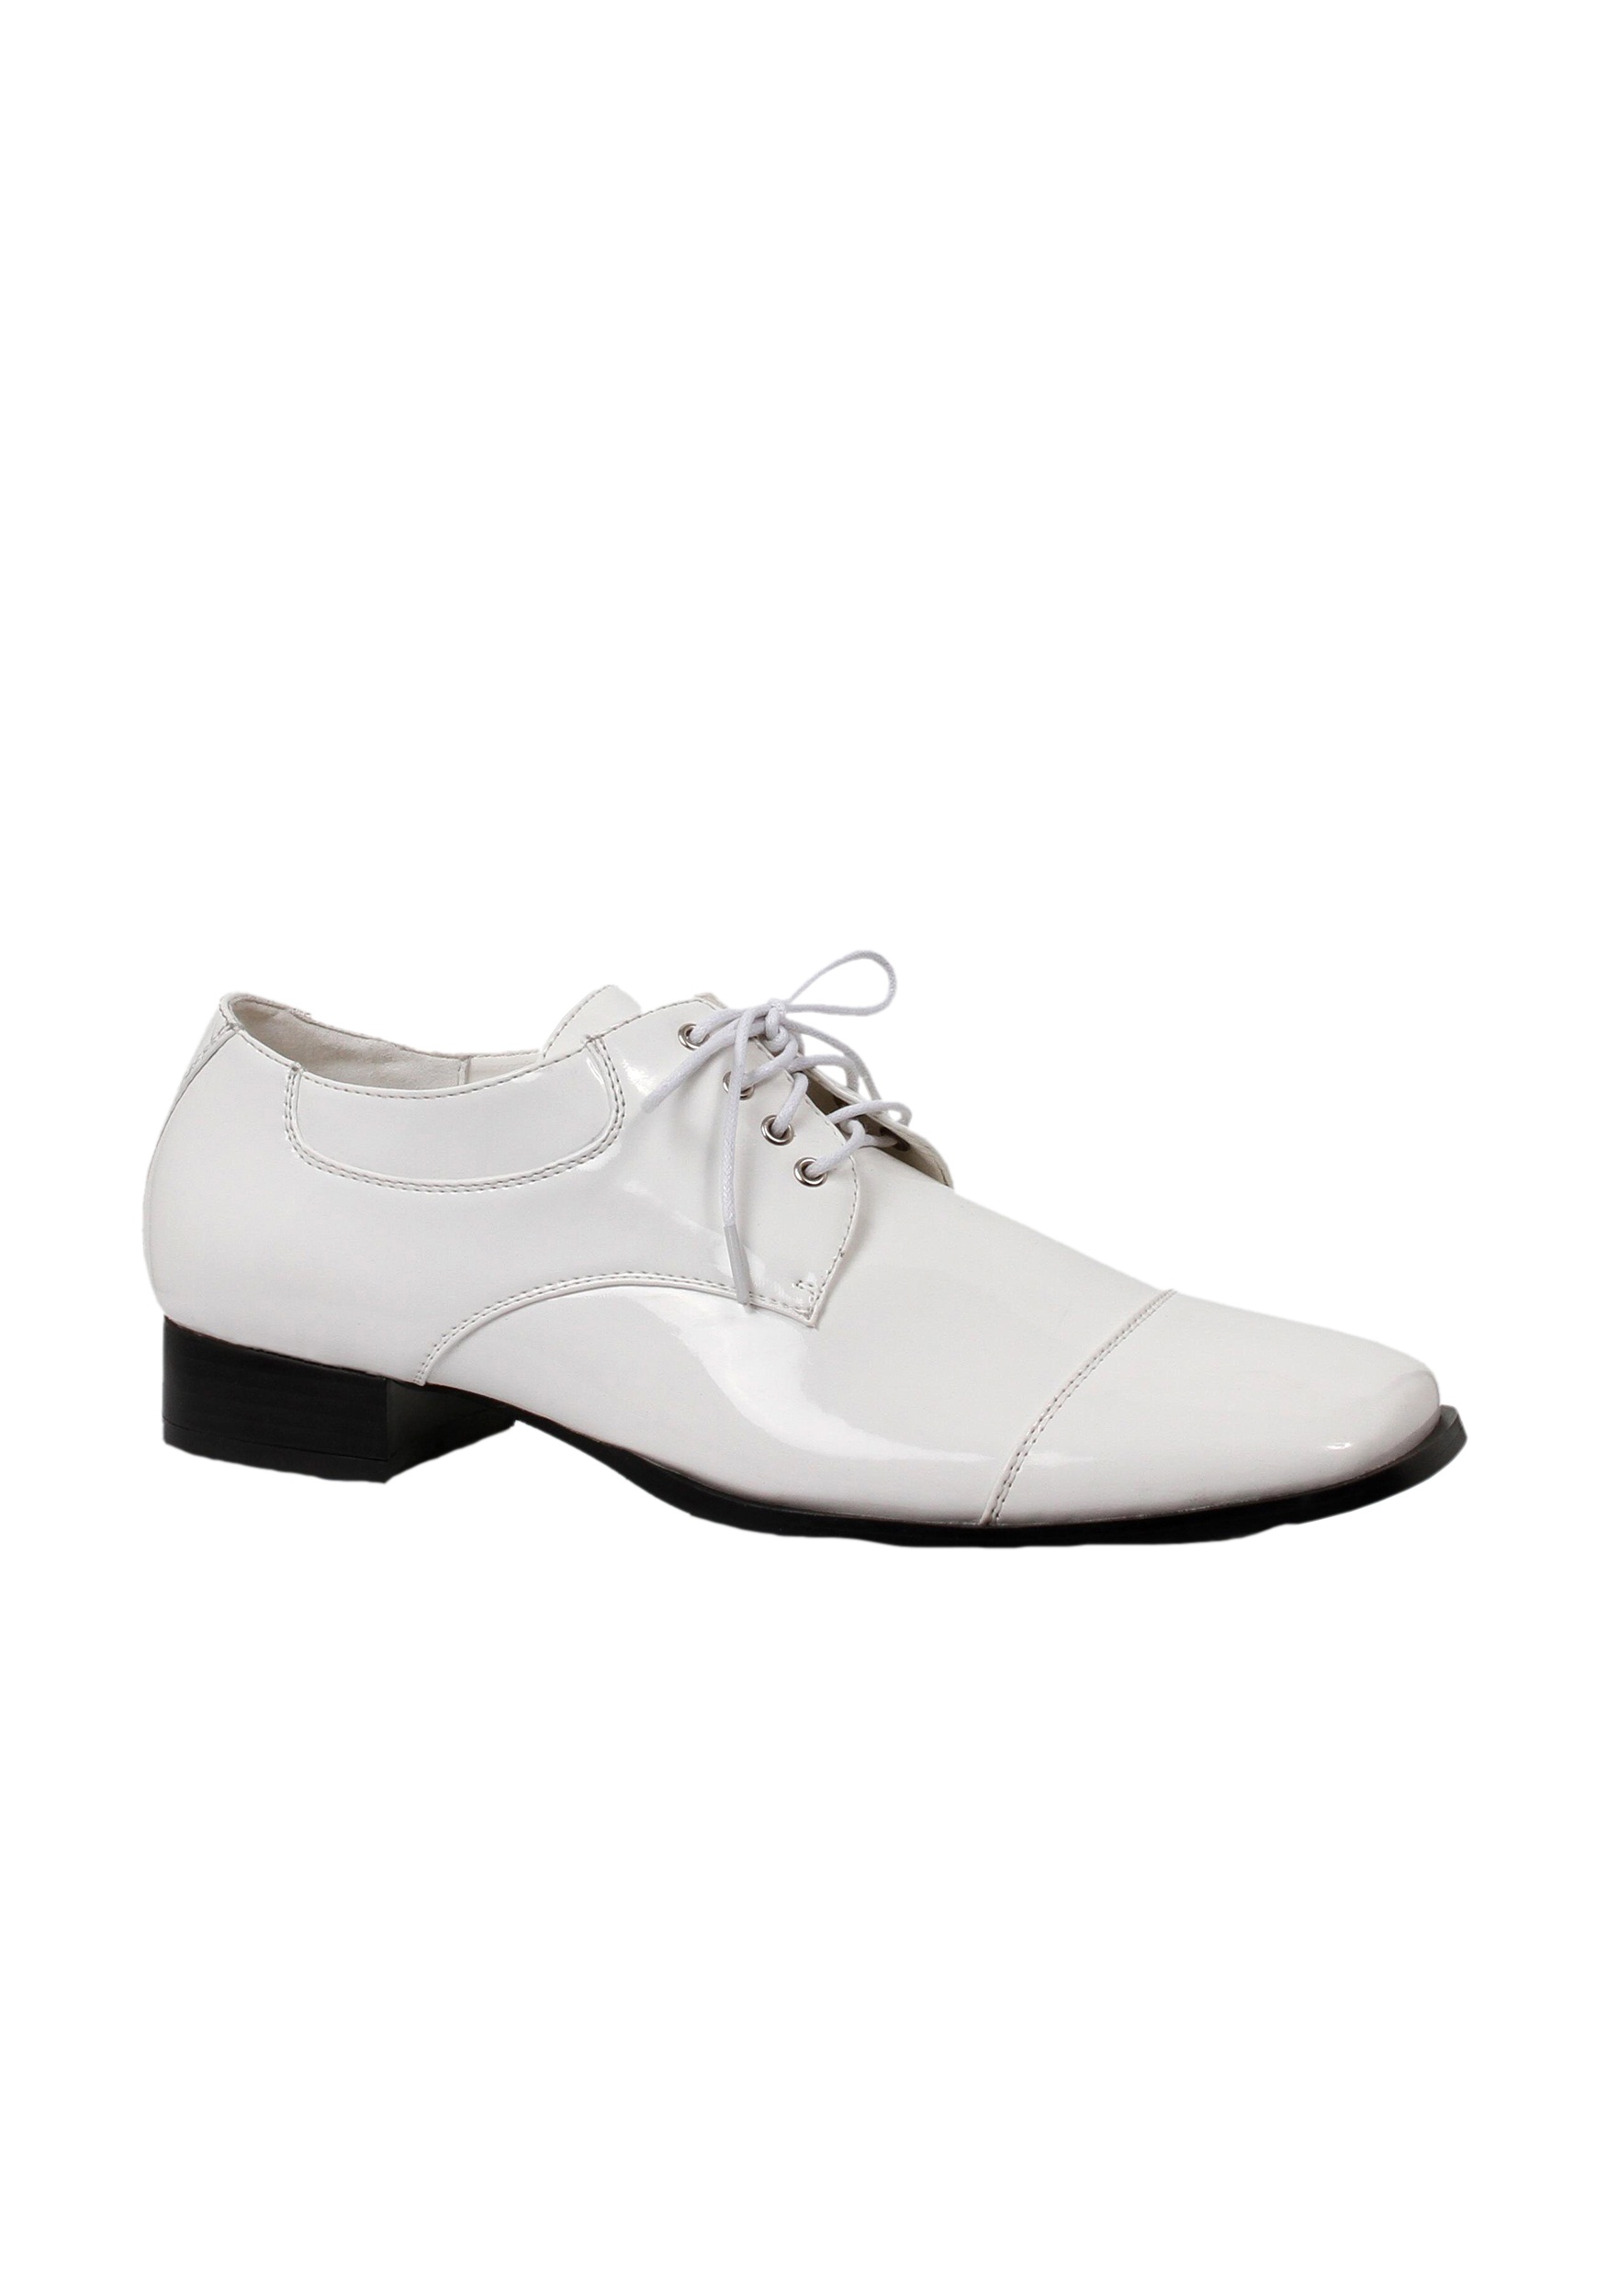 Mens White Dress Shoes 97